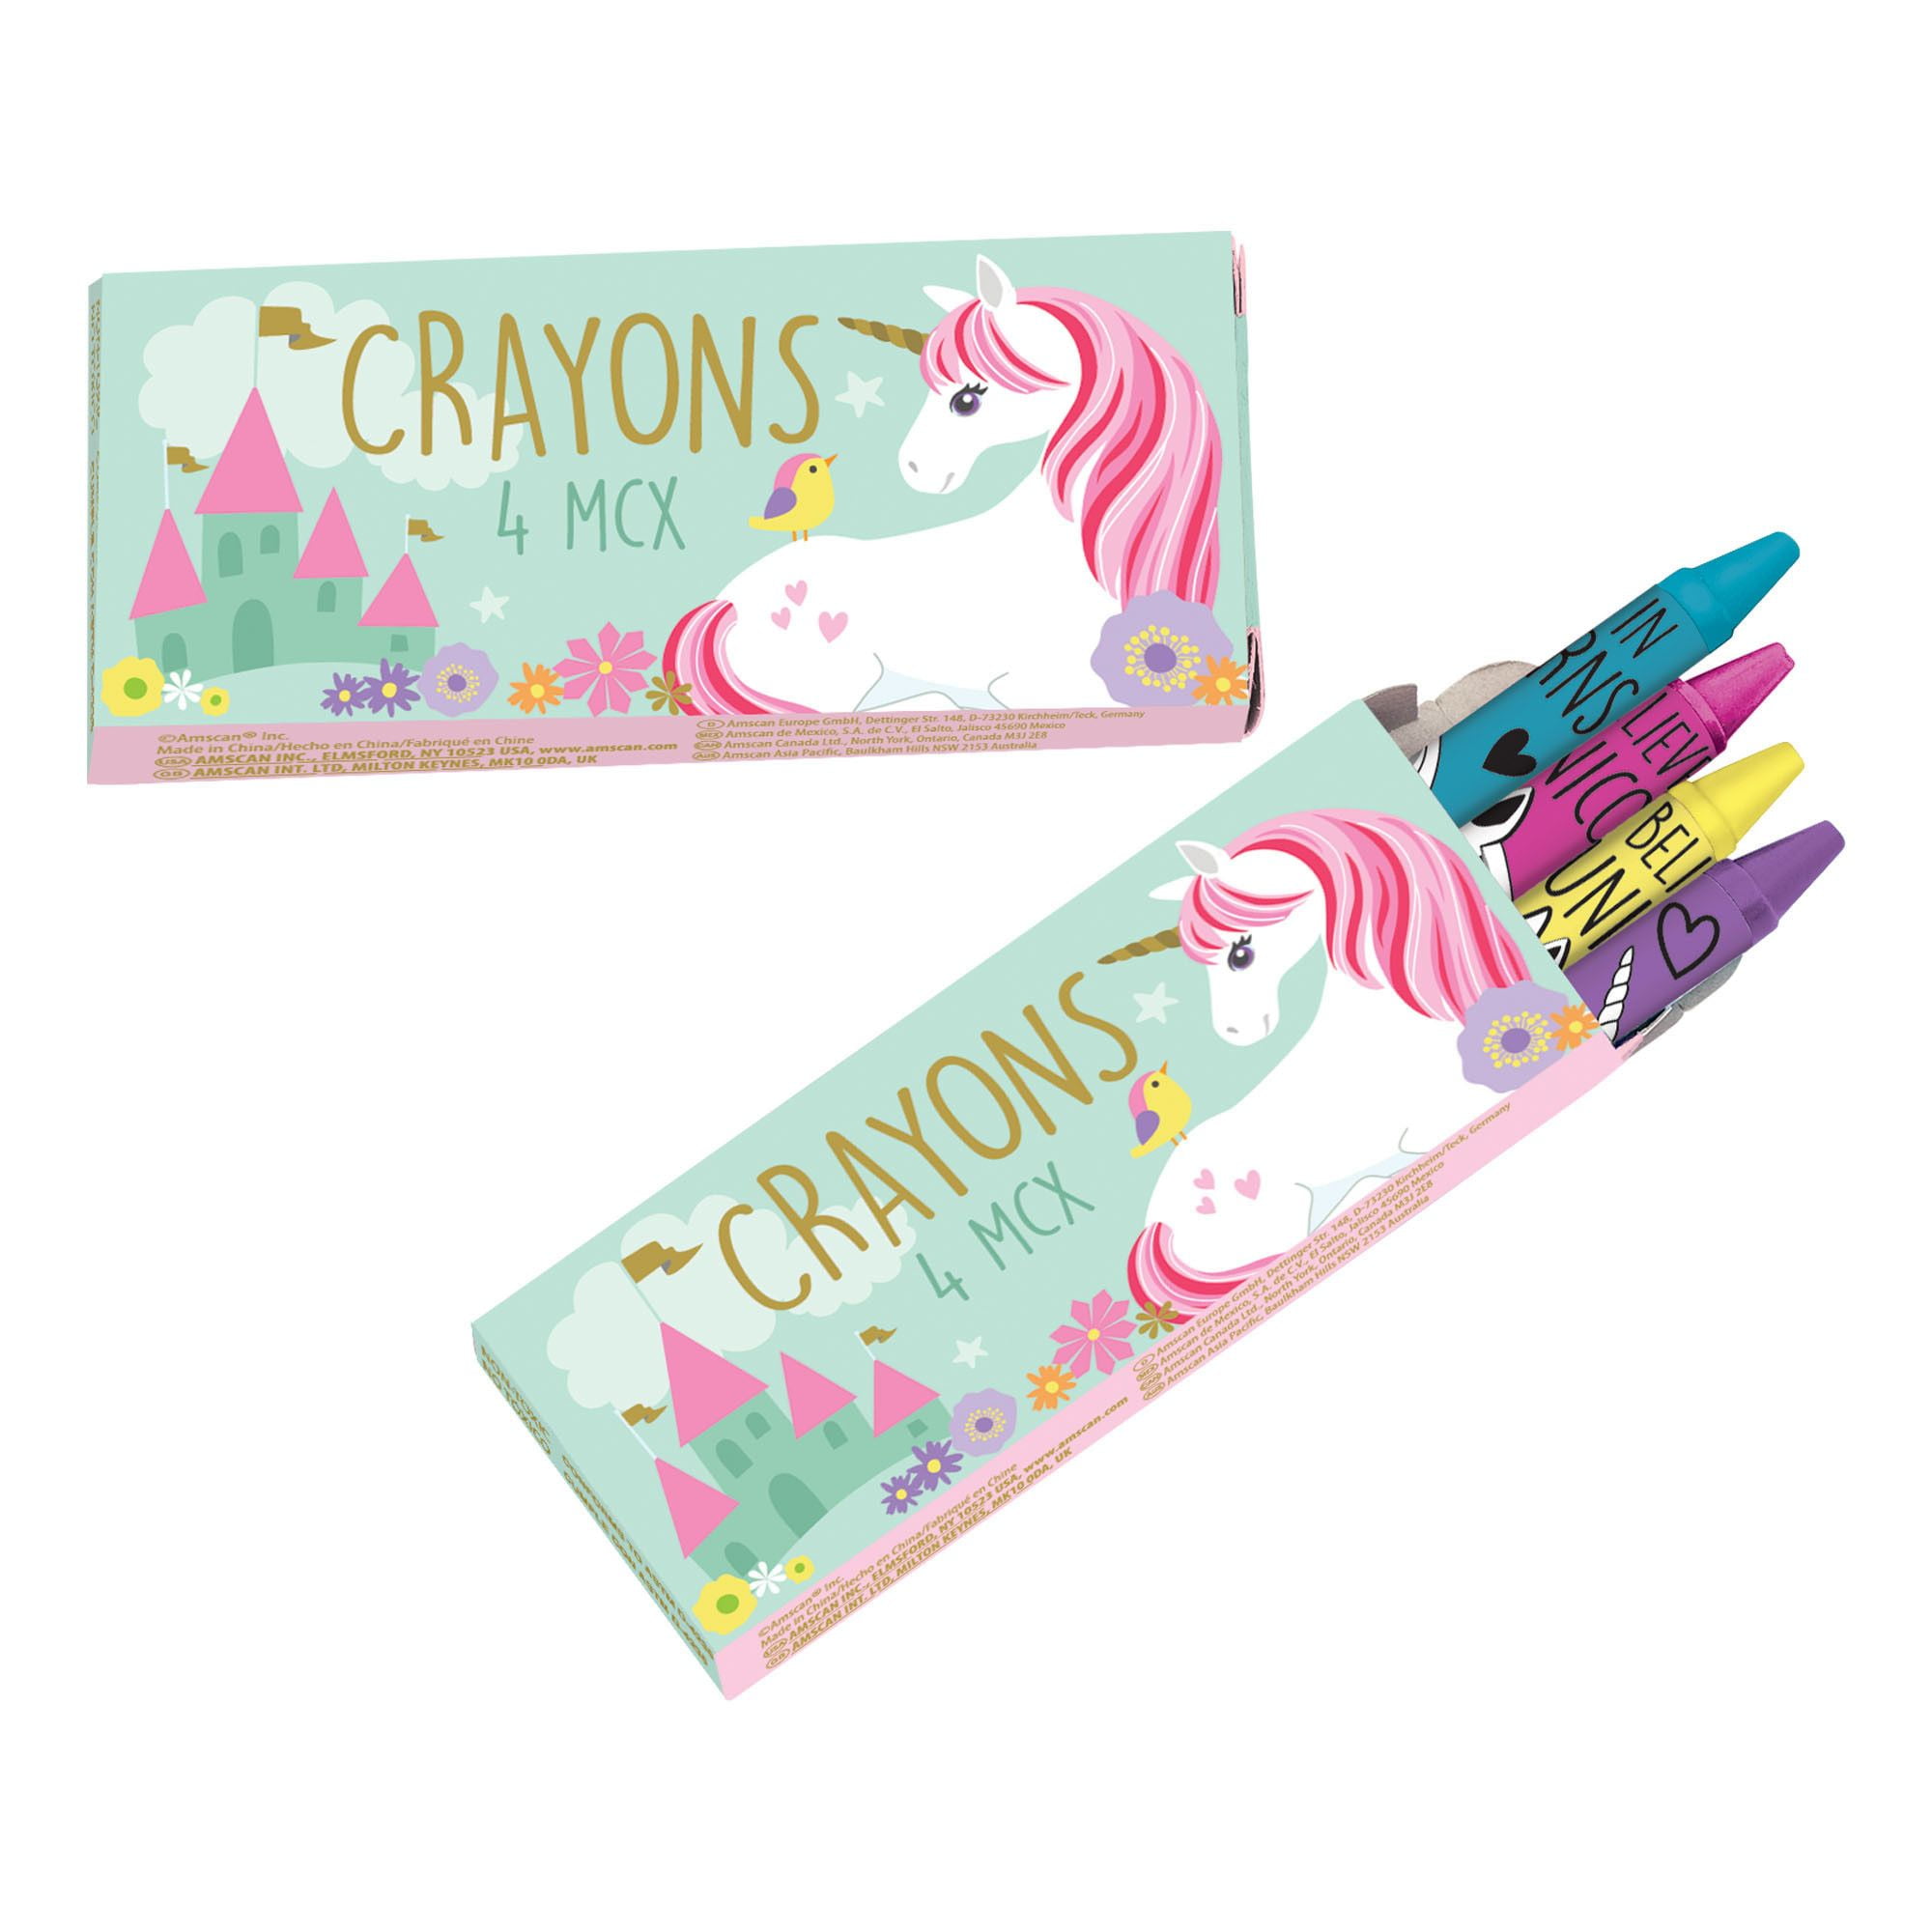 Unicorn Shaped Crayons, 6ct